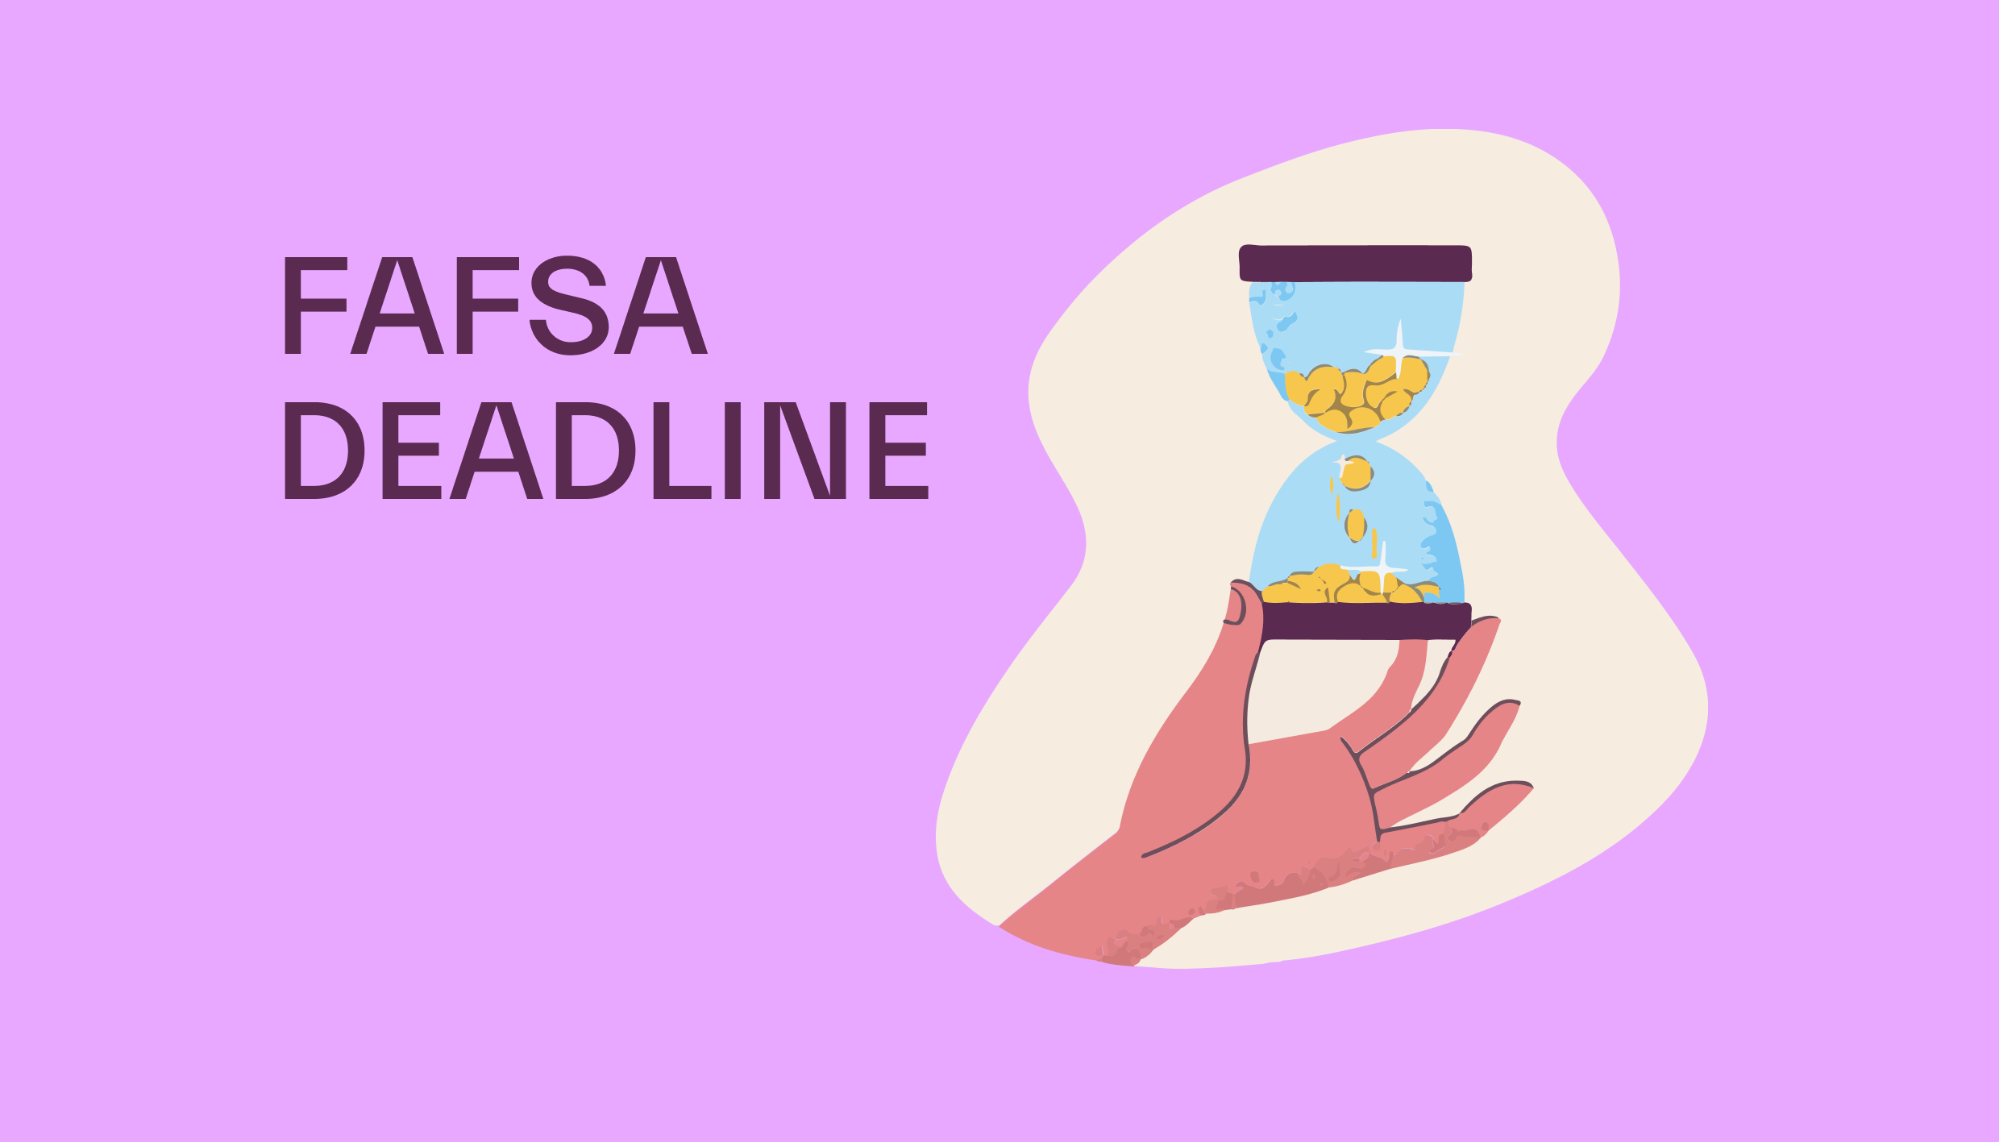 fafsa deadline cover image